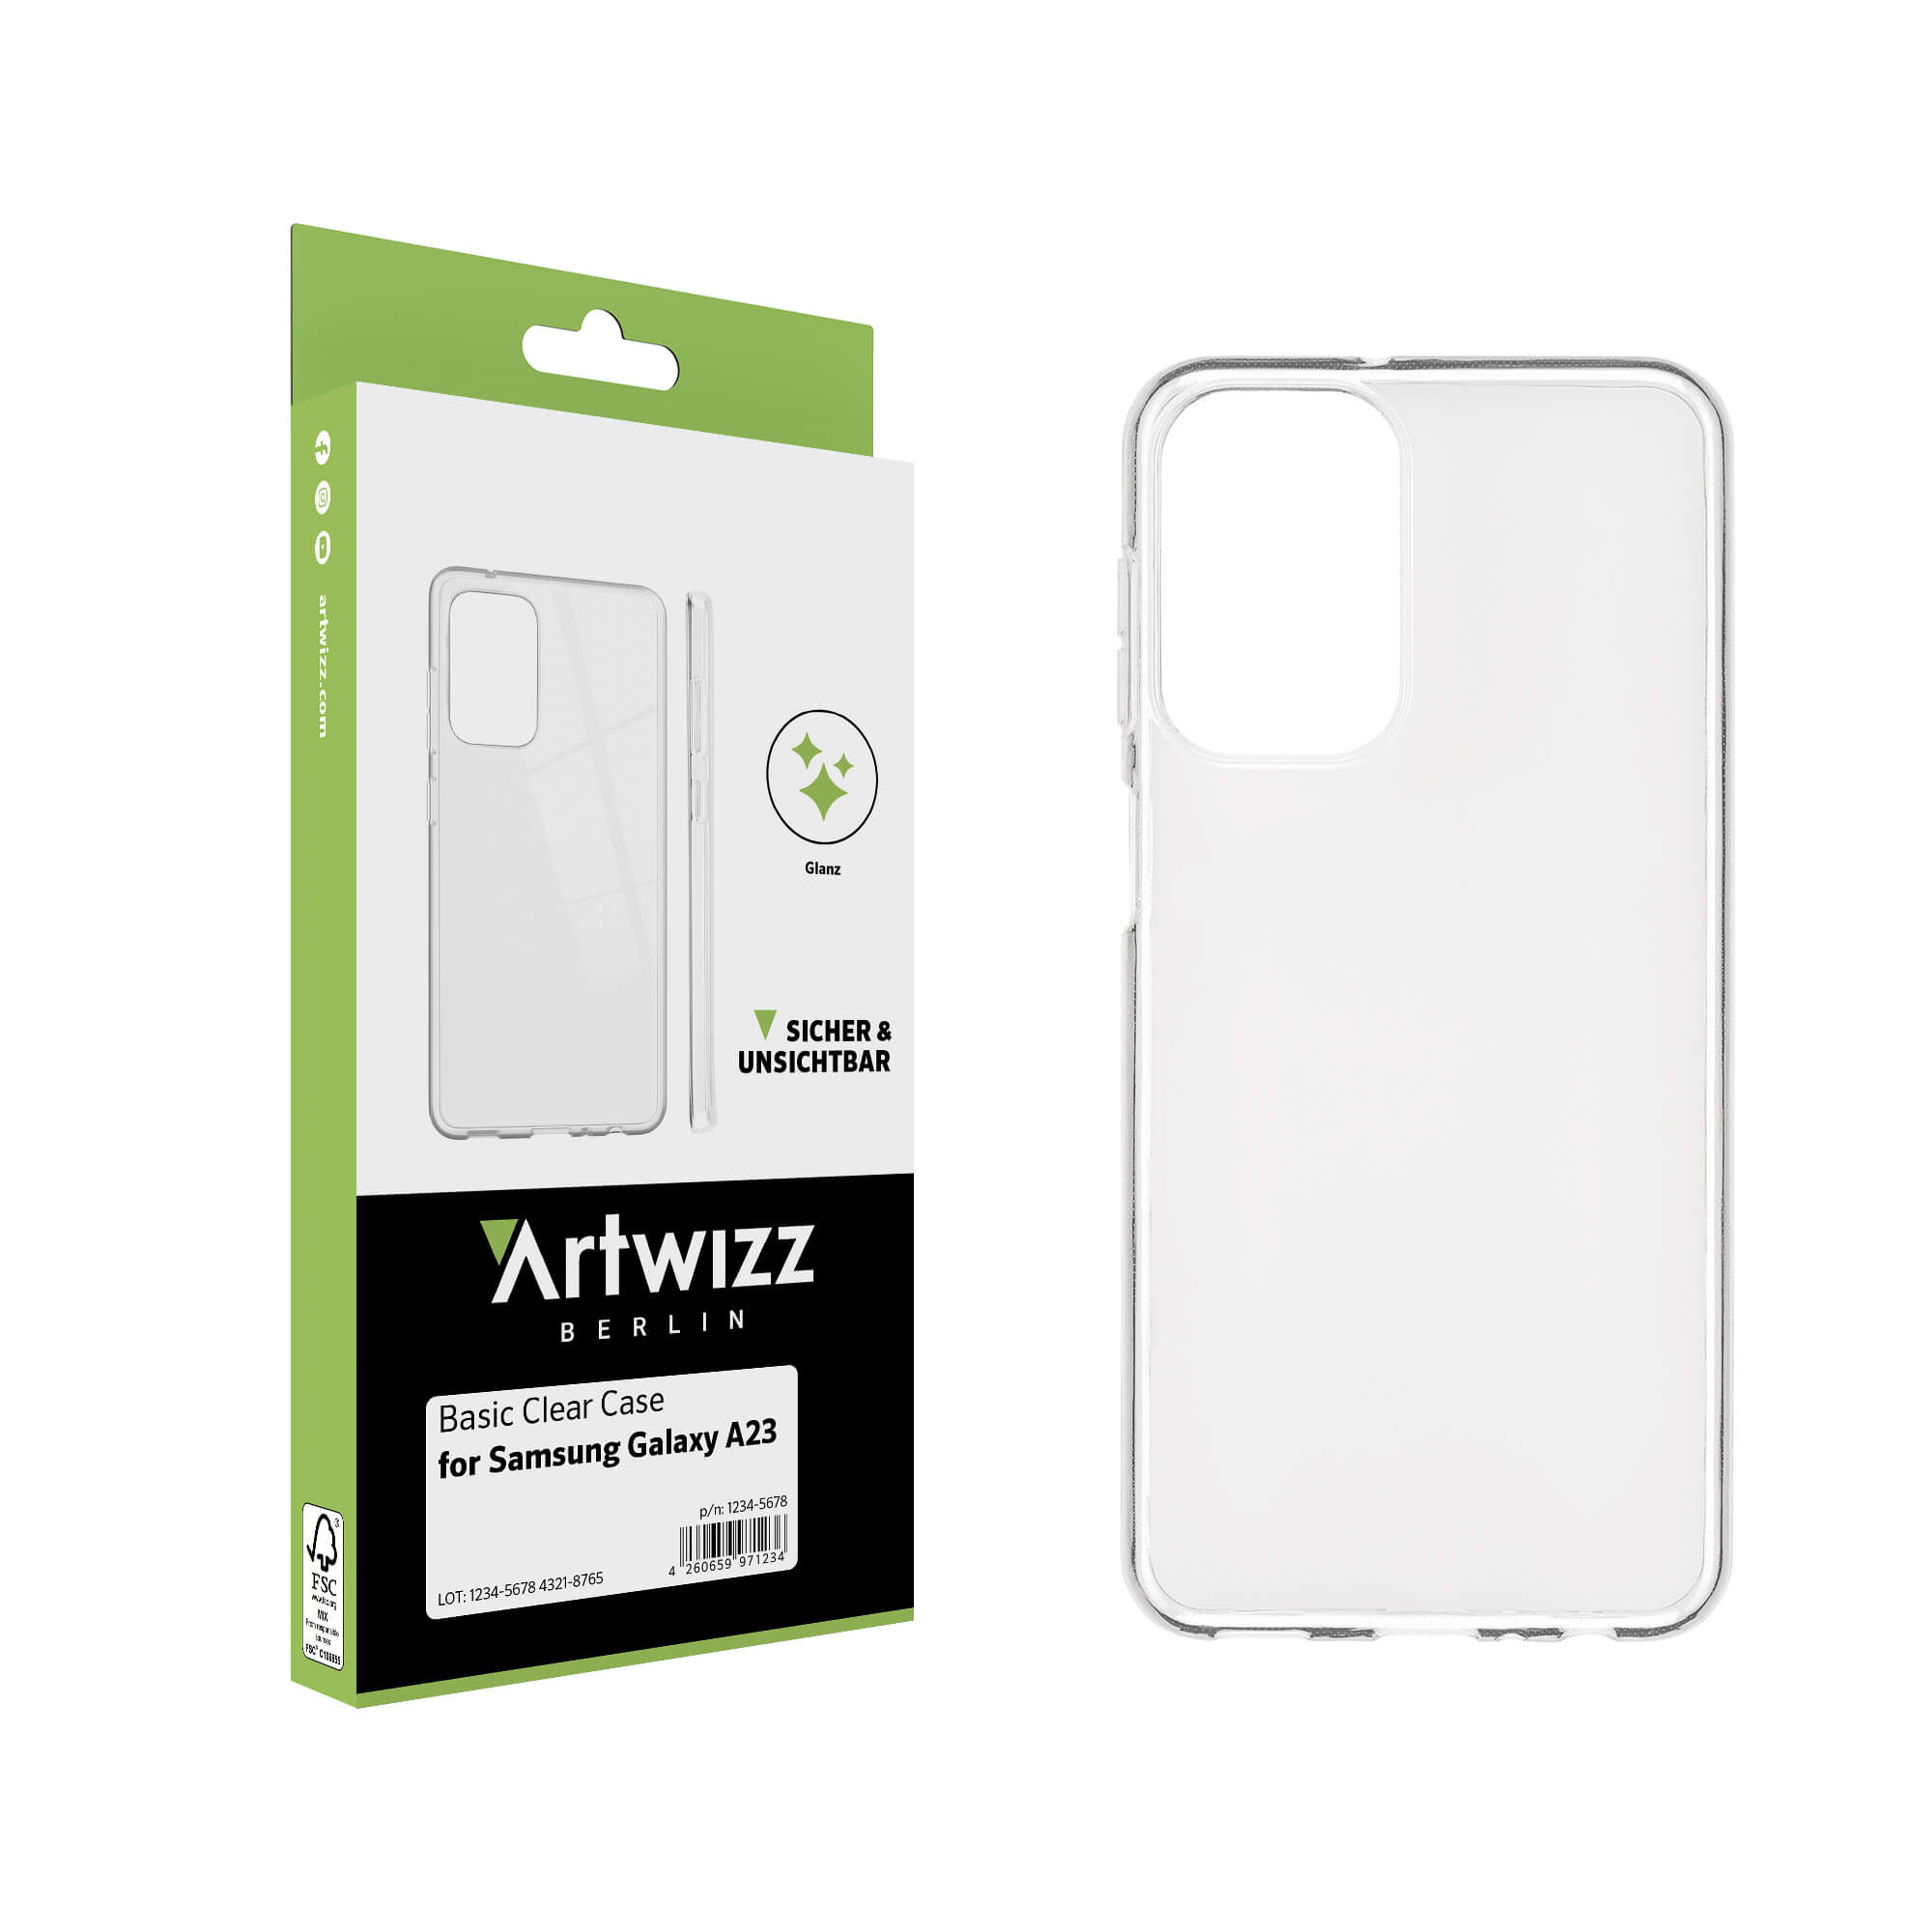 ARTWIZZ Basic Clear Case, Backcover, Transparent Galaxy A23, Samsung